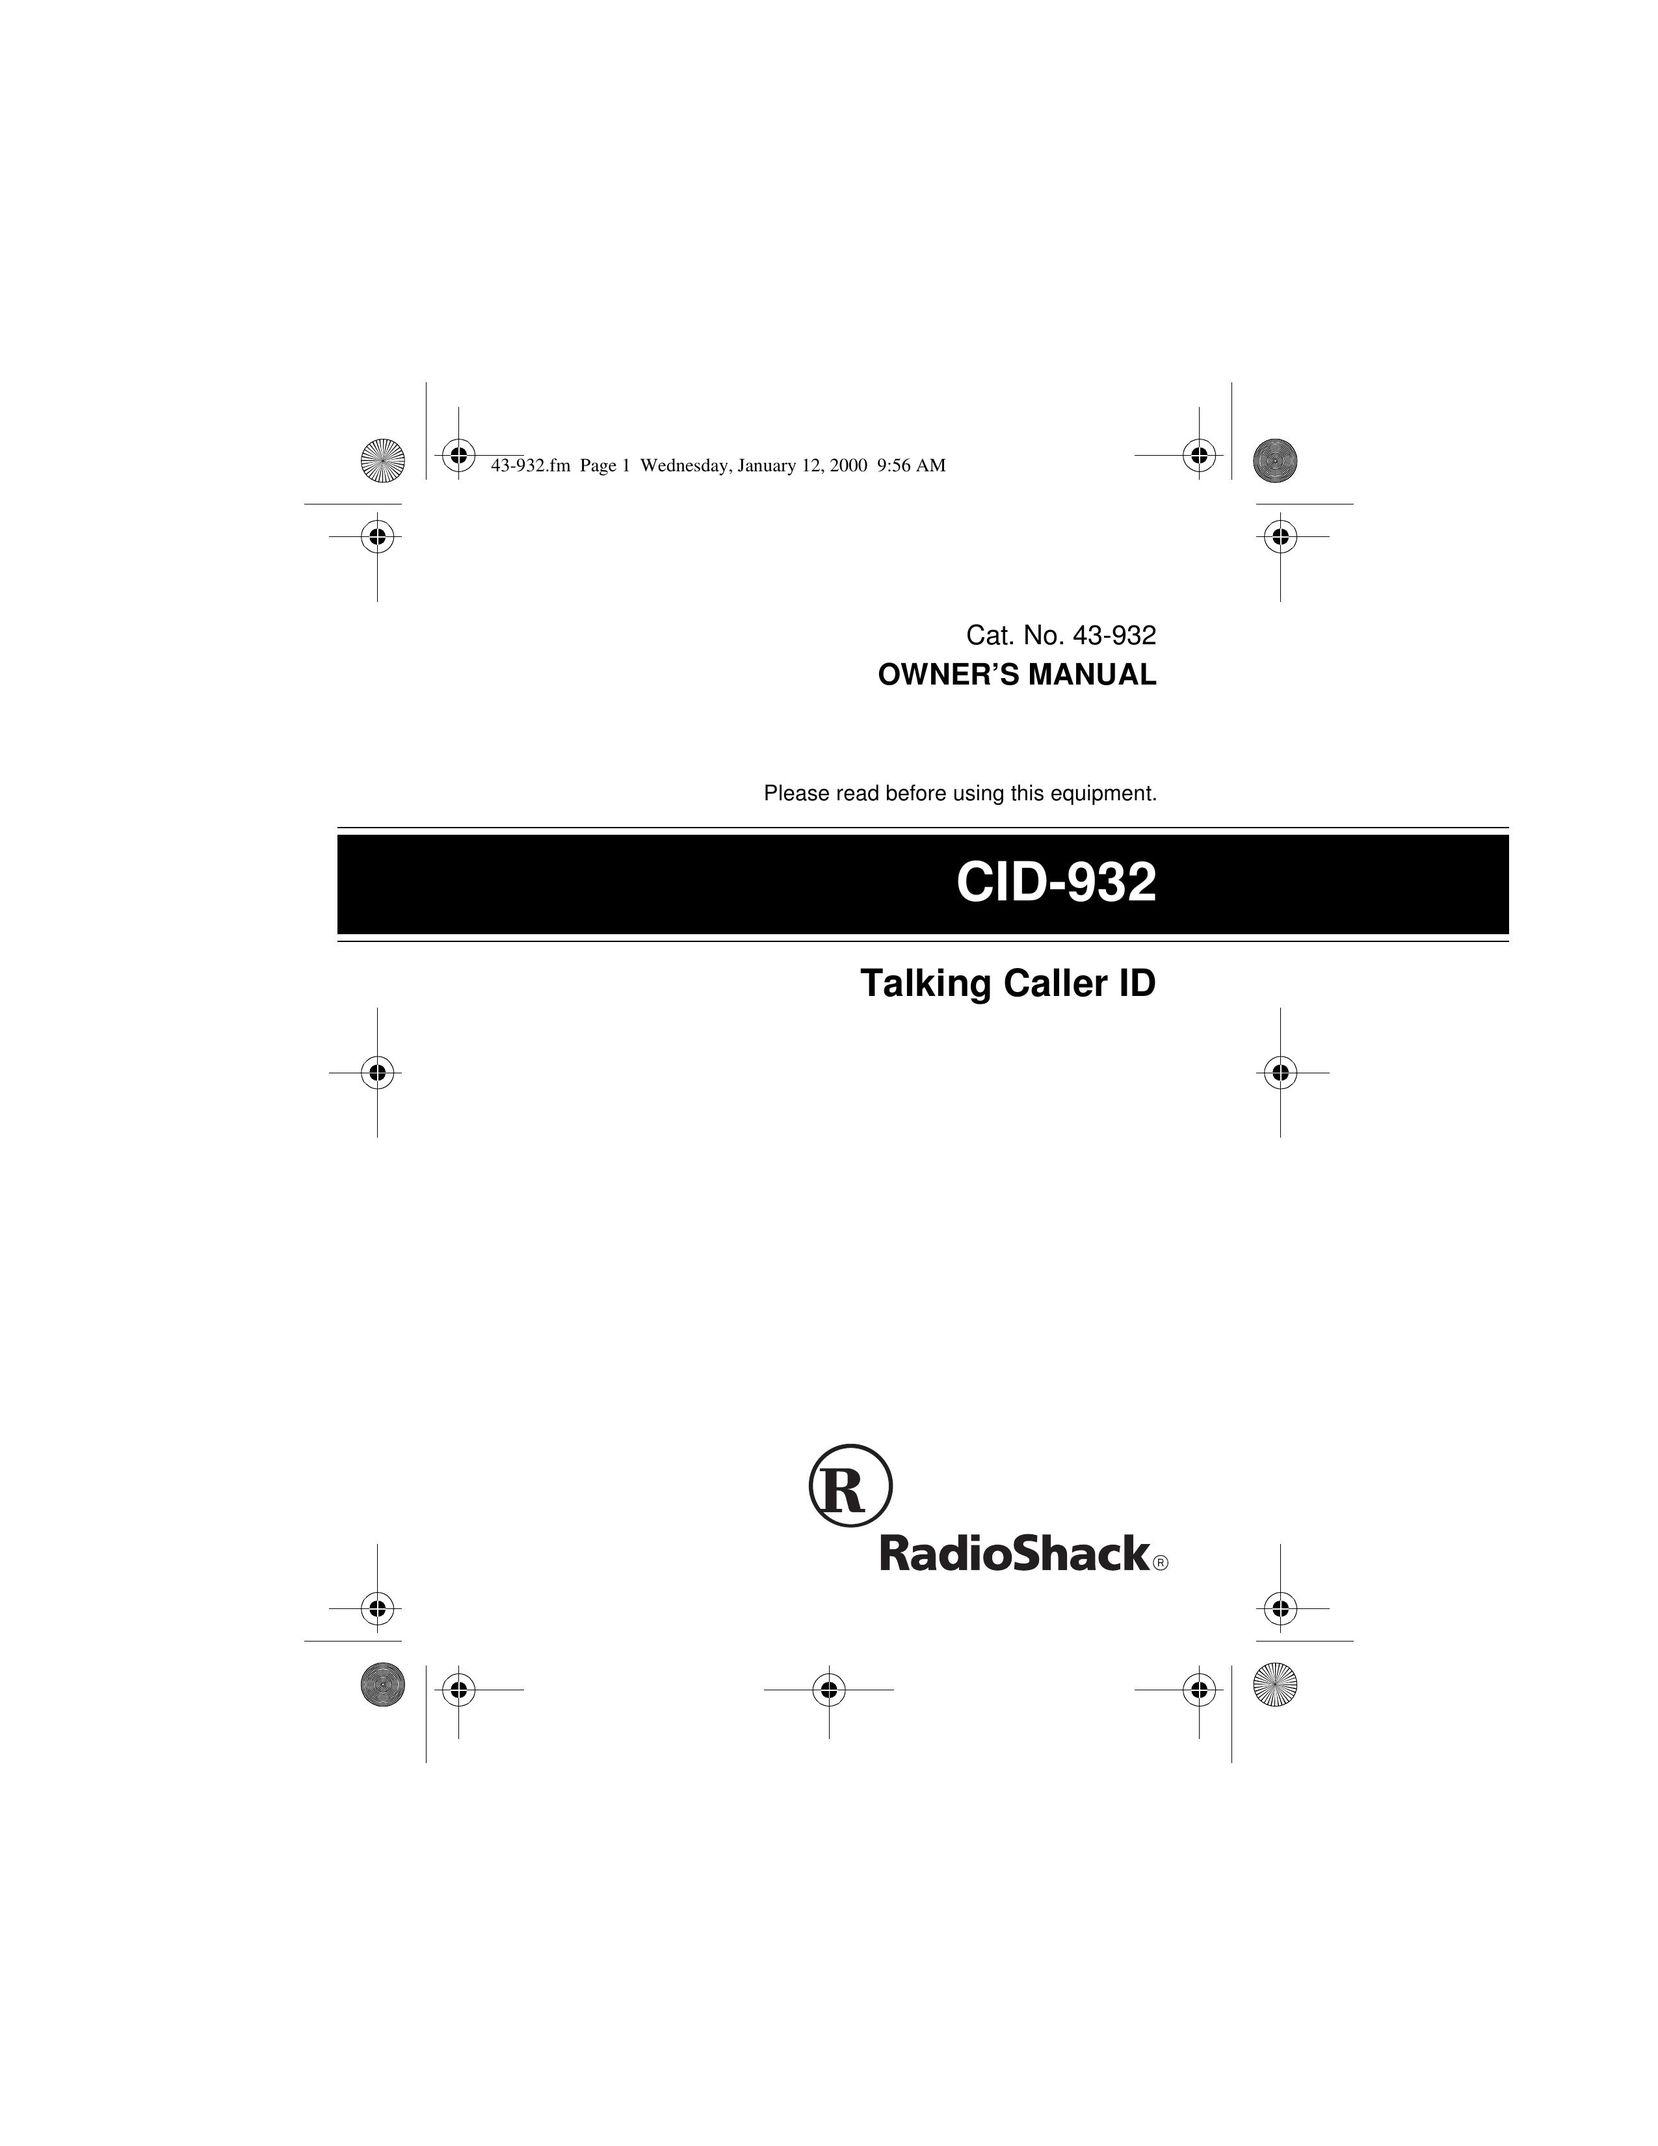 Radio Shack CID-932 Caller ID Box User Manual